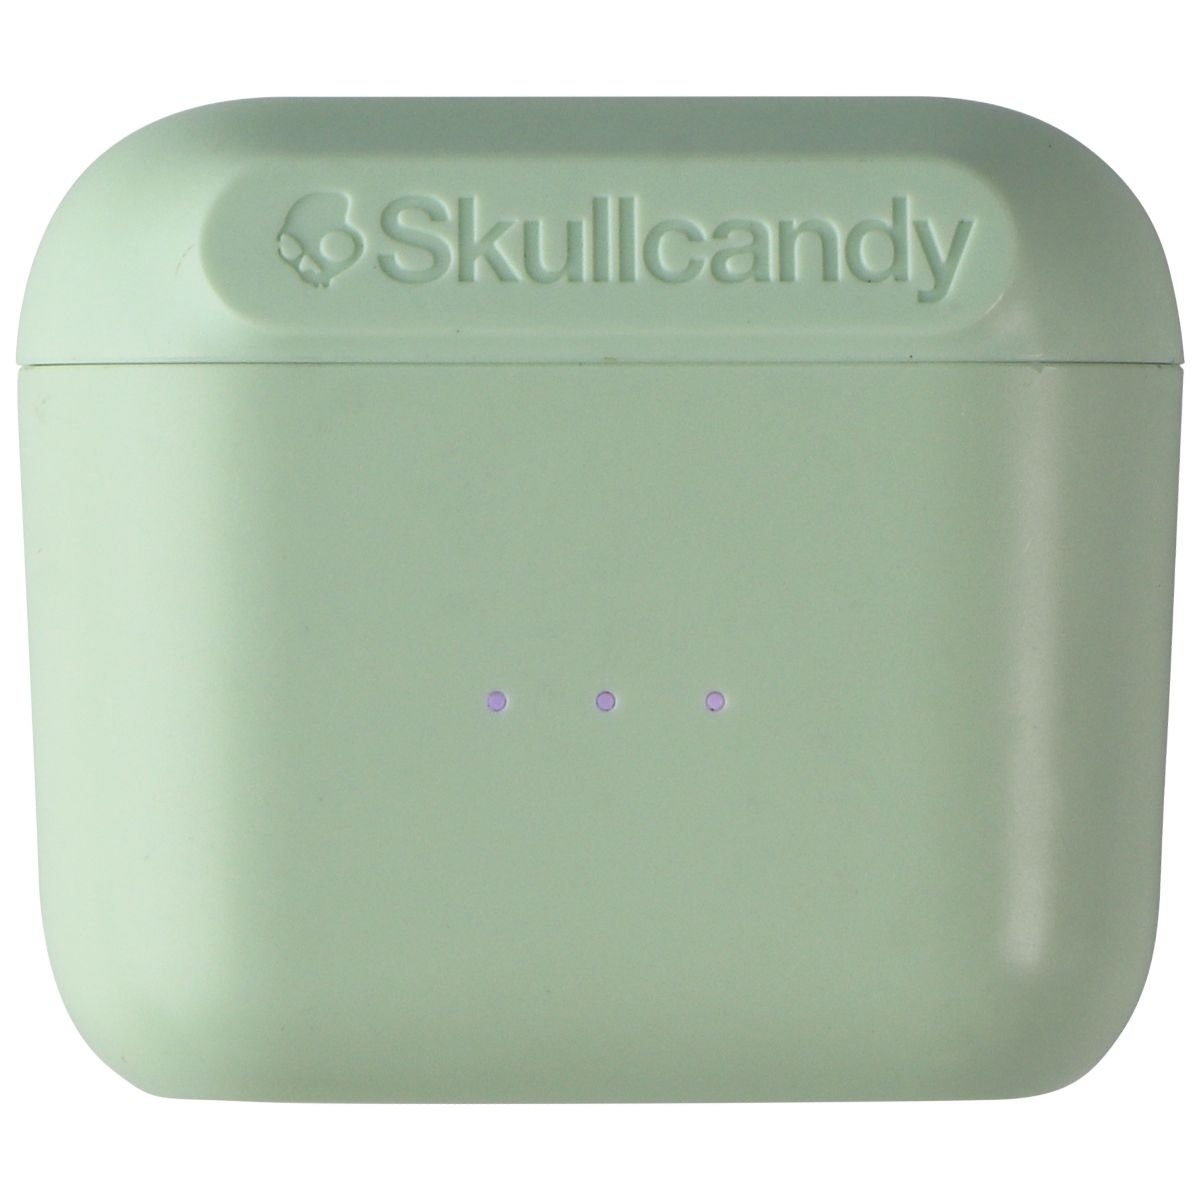 Skullcandy Original Charging Case For Indy Headphones - Mint (Case Only)